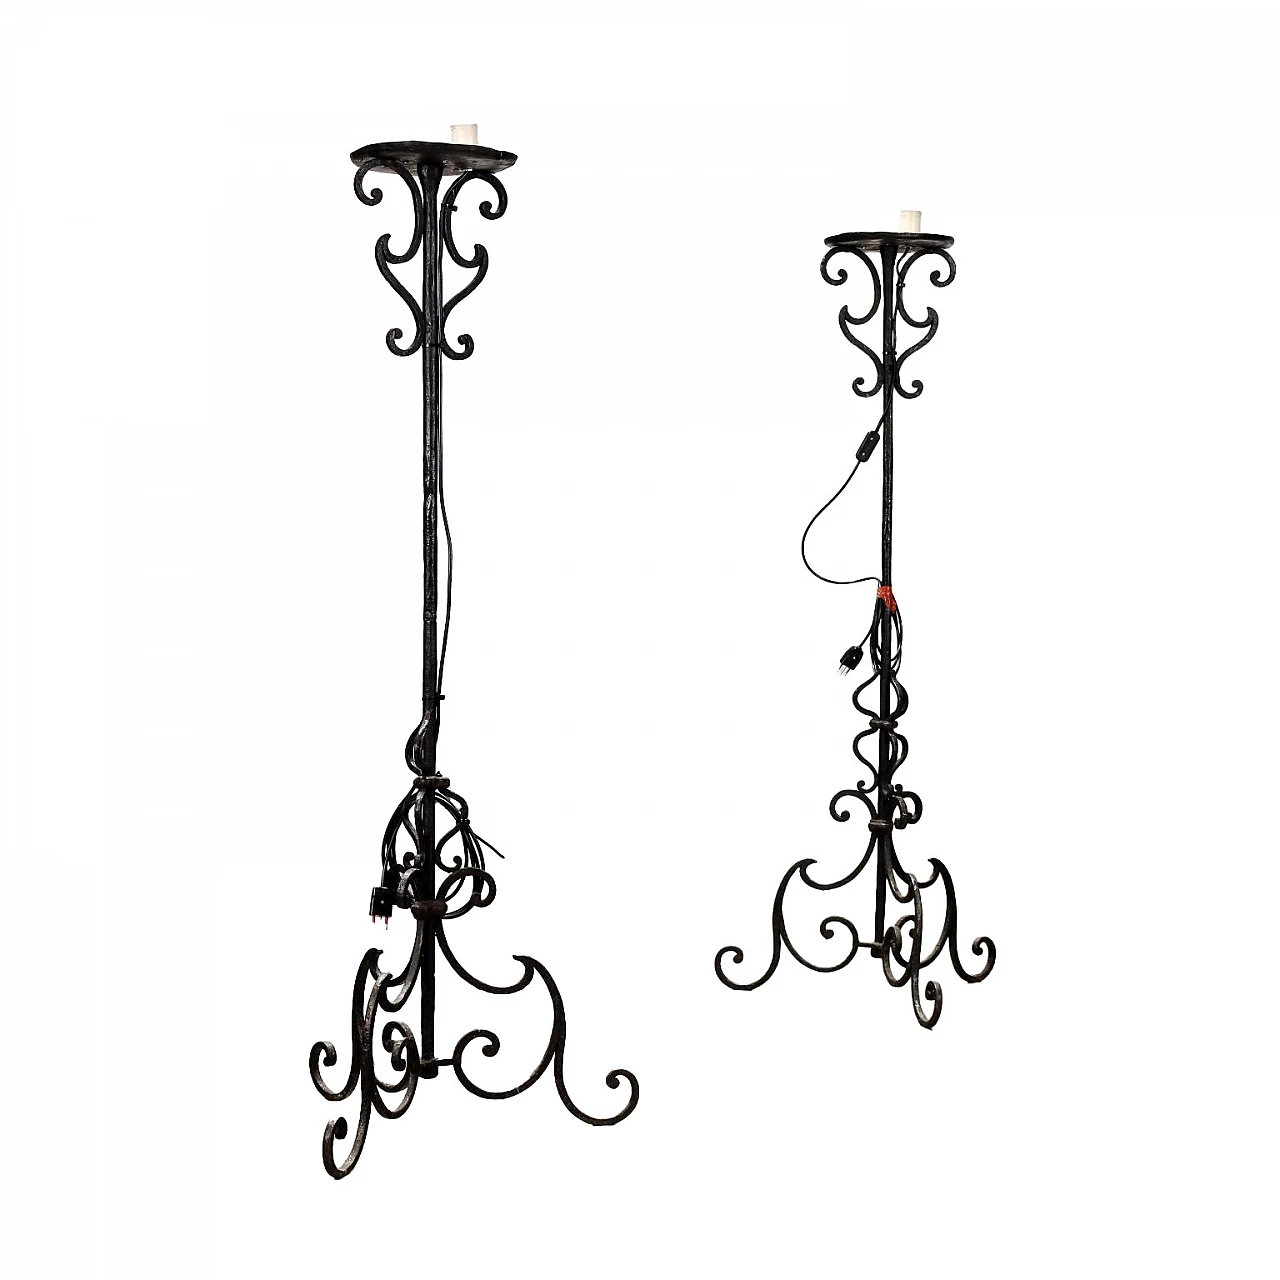 Pair of wrought iron candlesticks, 19th century 1